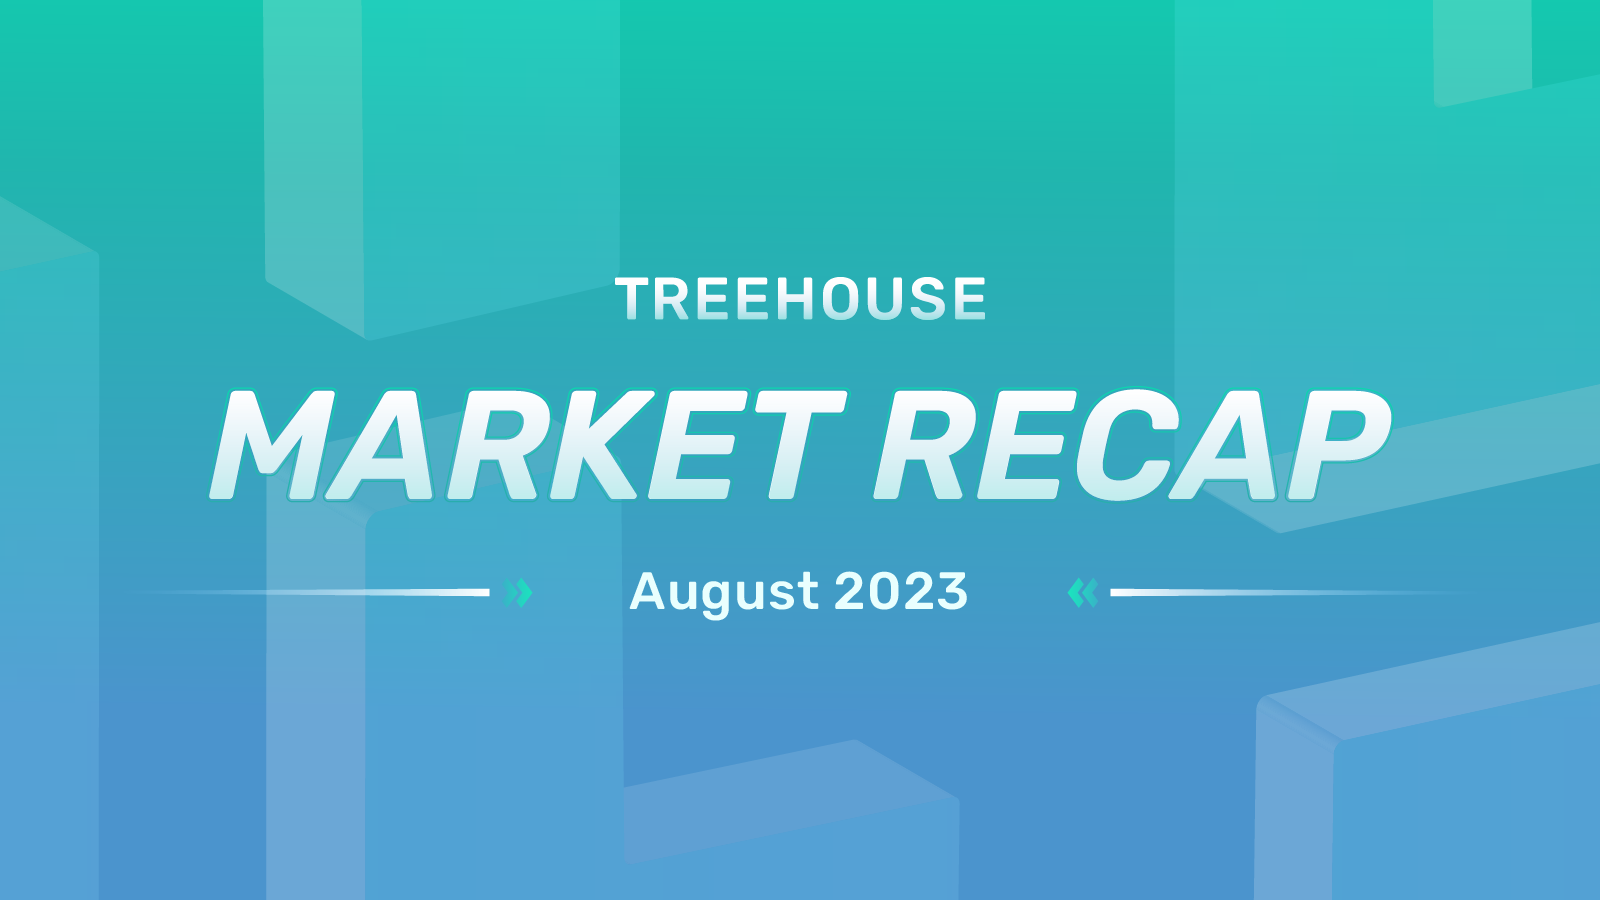 August 2023 Market Recap